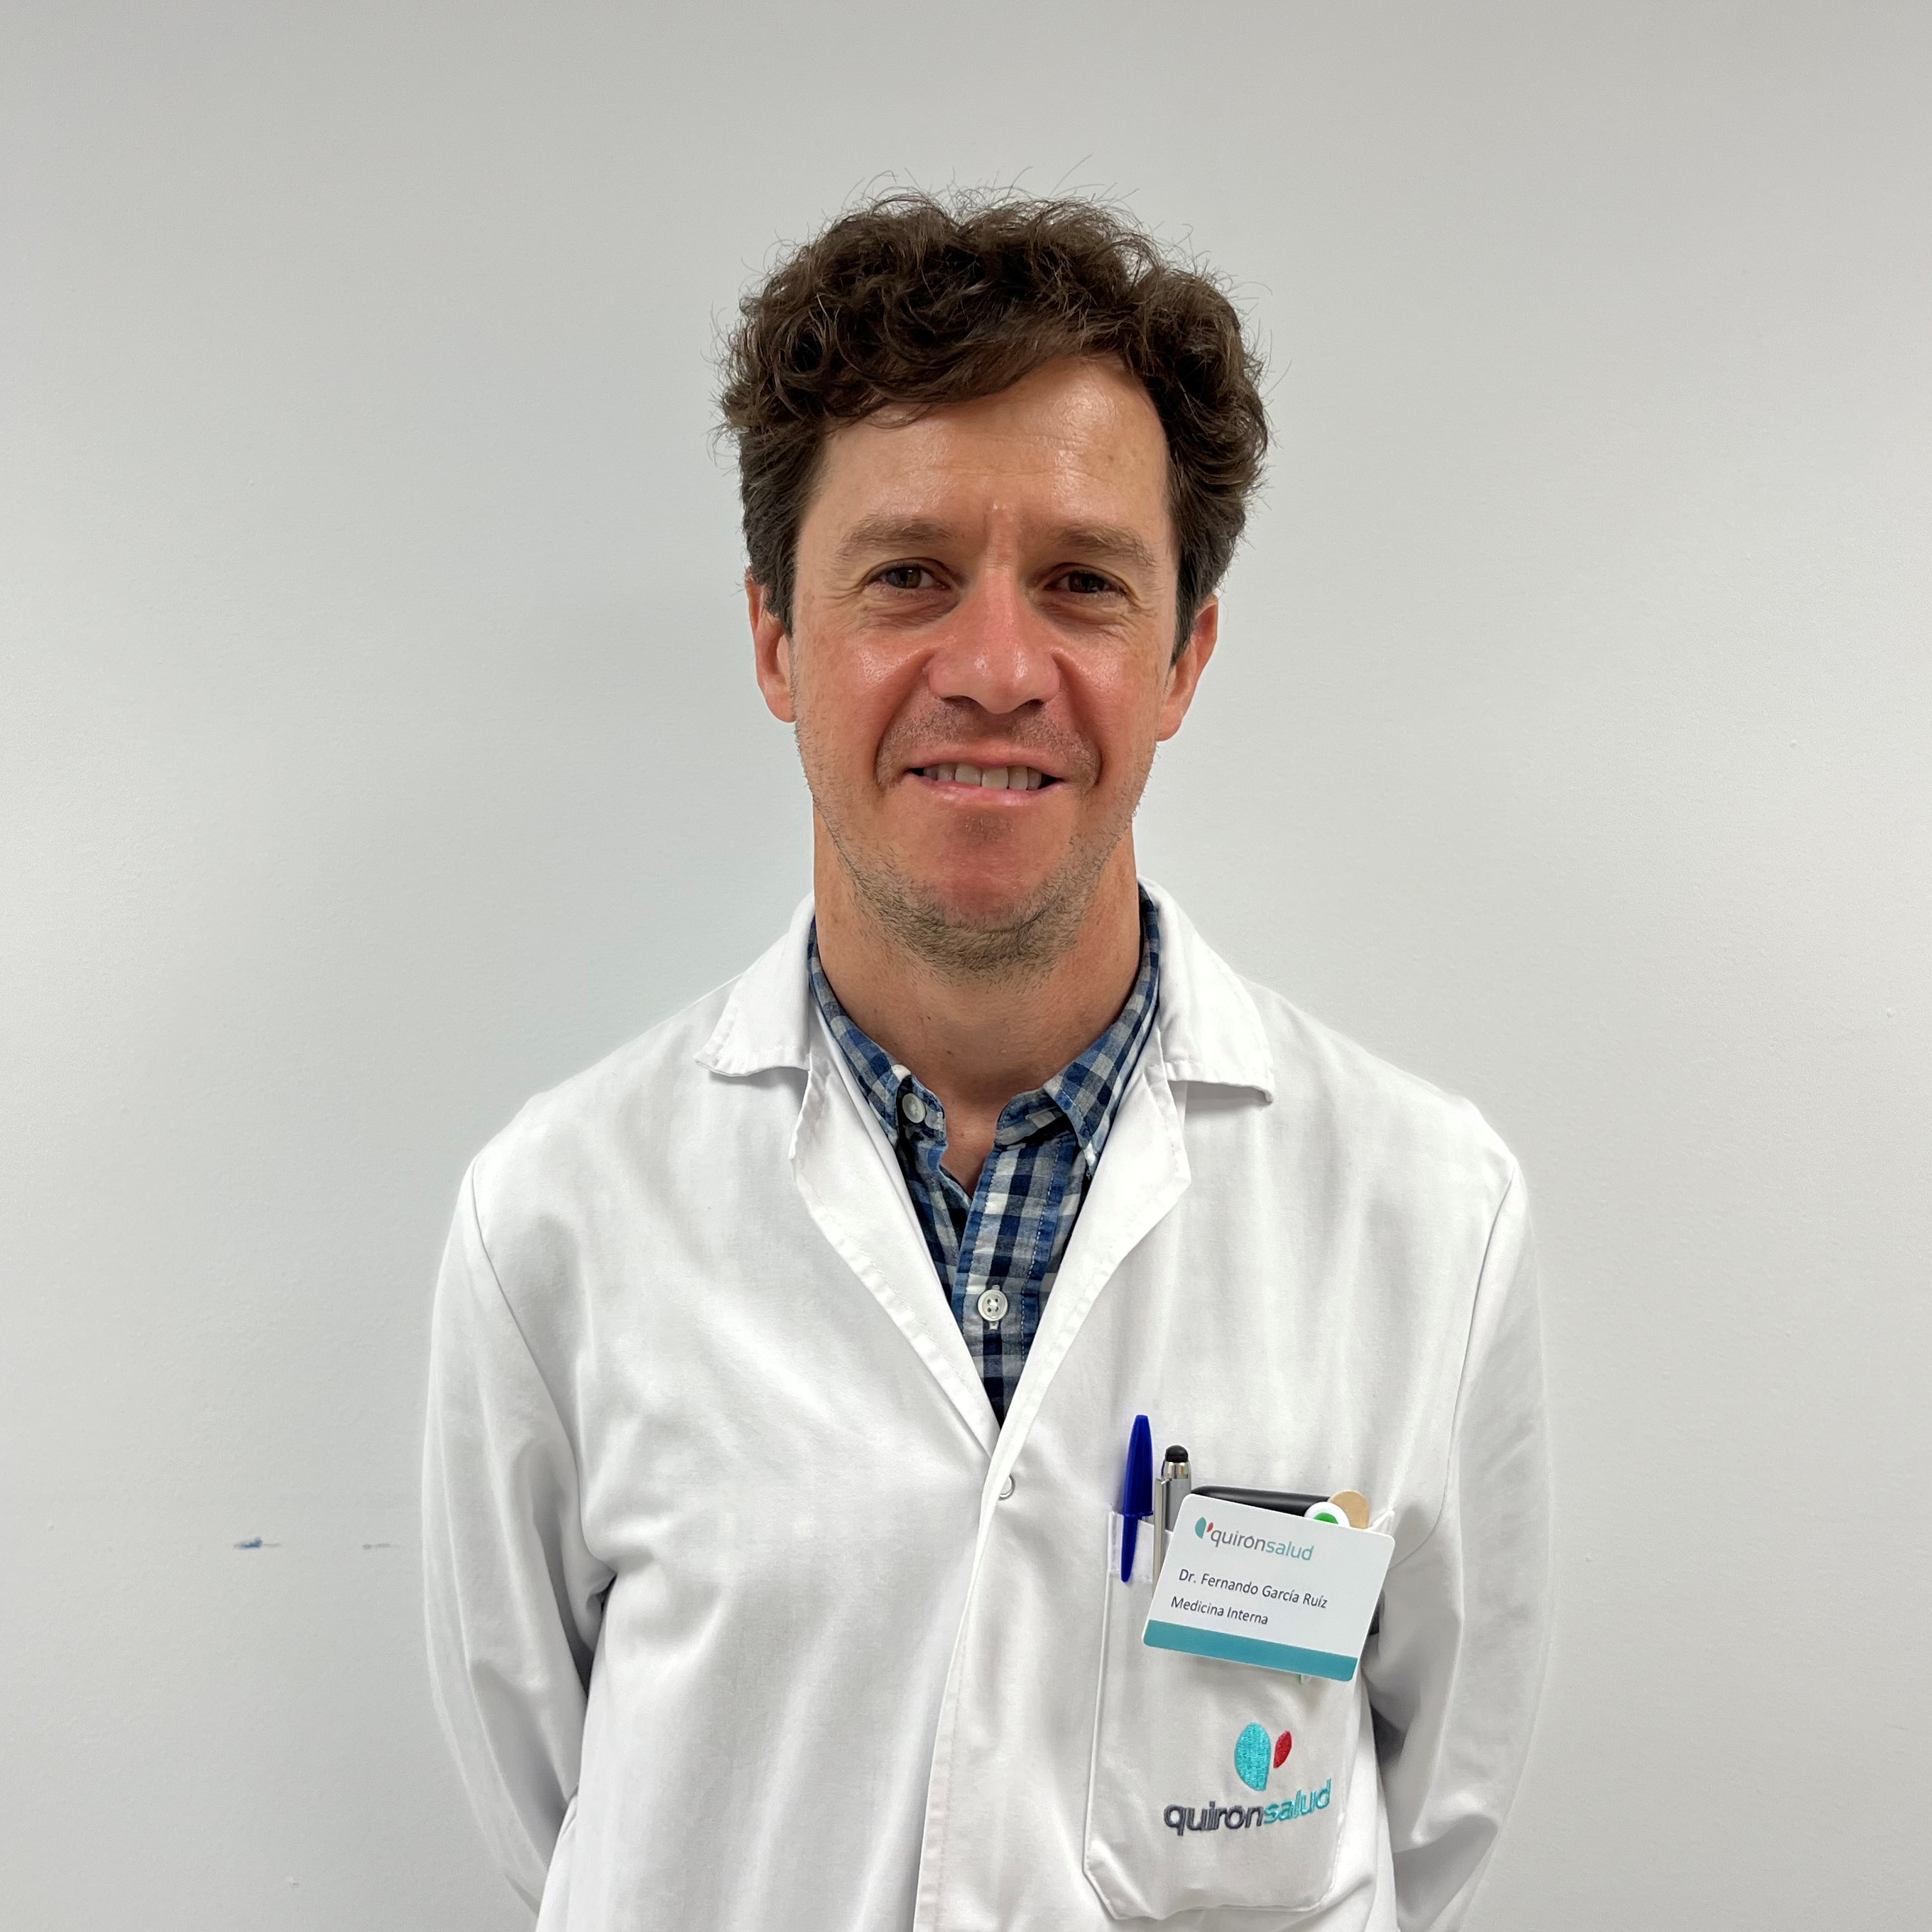 Dr. Fernando Ruiz - Hospital Quirónsalud Vitoria